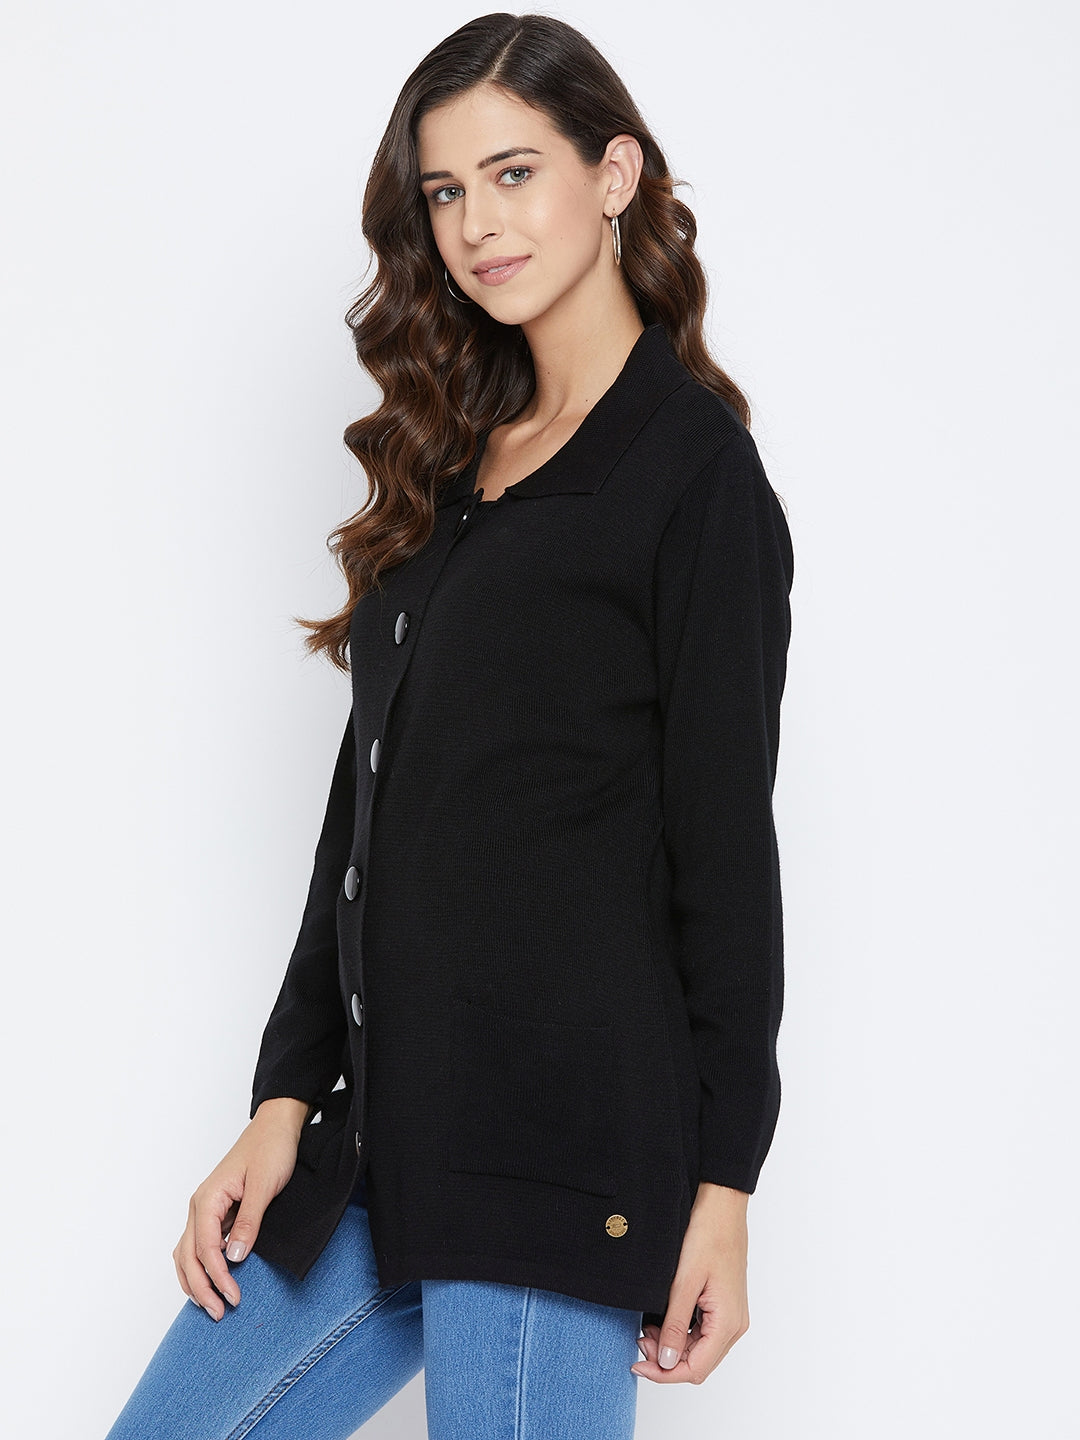 Livfree Women's Collar neck Full-Sleeves Solid Cardigans - Black